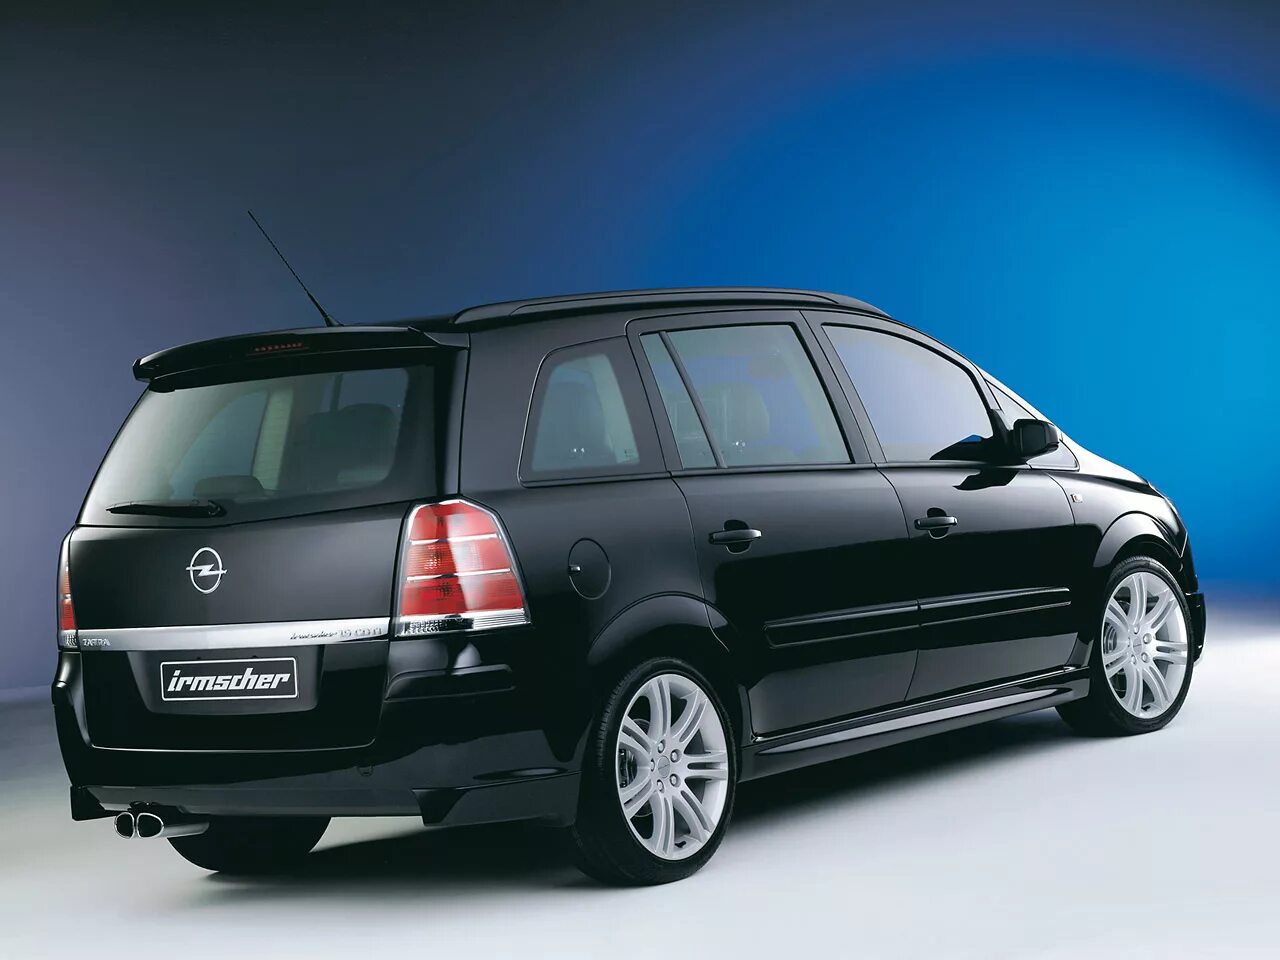 Opel zafira b купить. Opel Zafira b 2005. Opel Zafira 1.9. Irmscher Opel Zafira a. Opel Zafira 2005 Tuning.